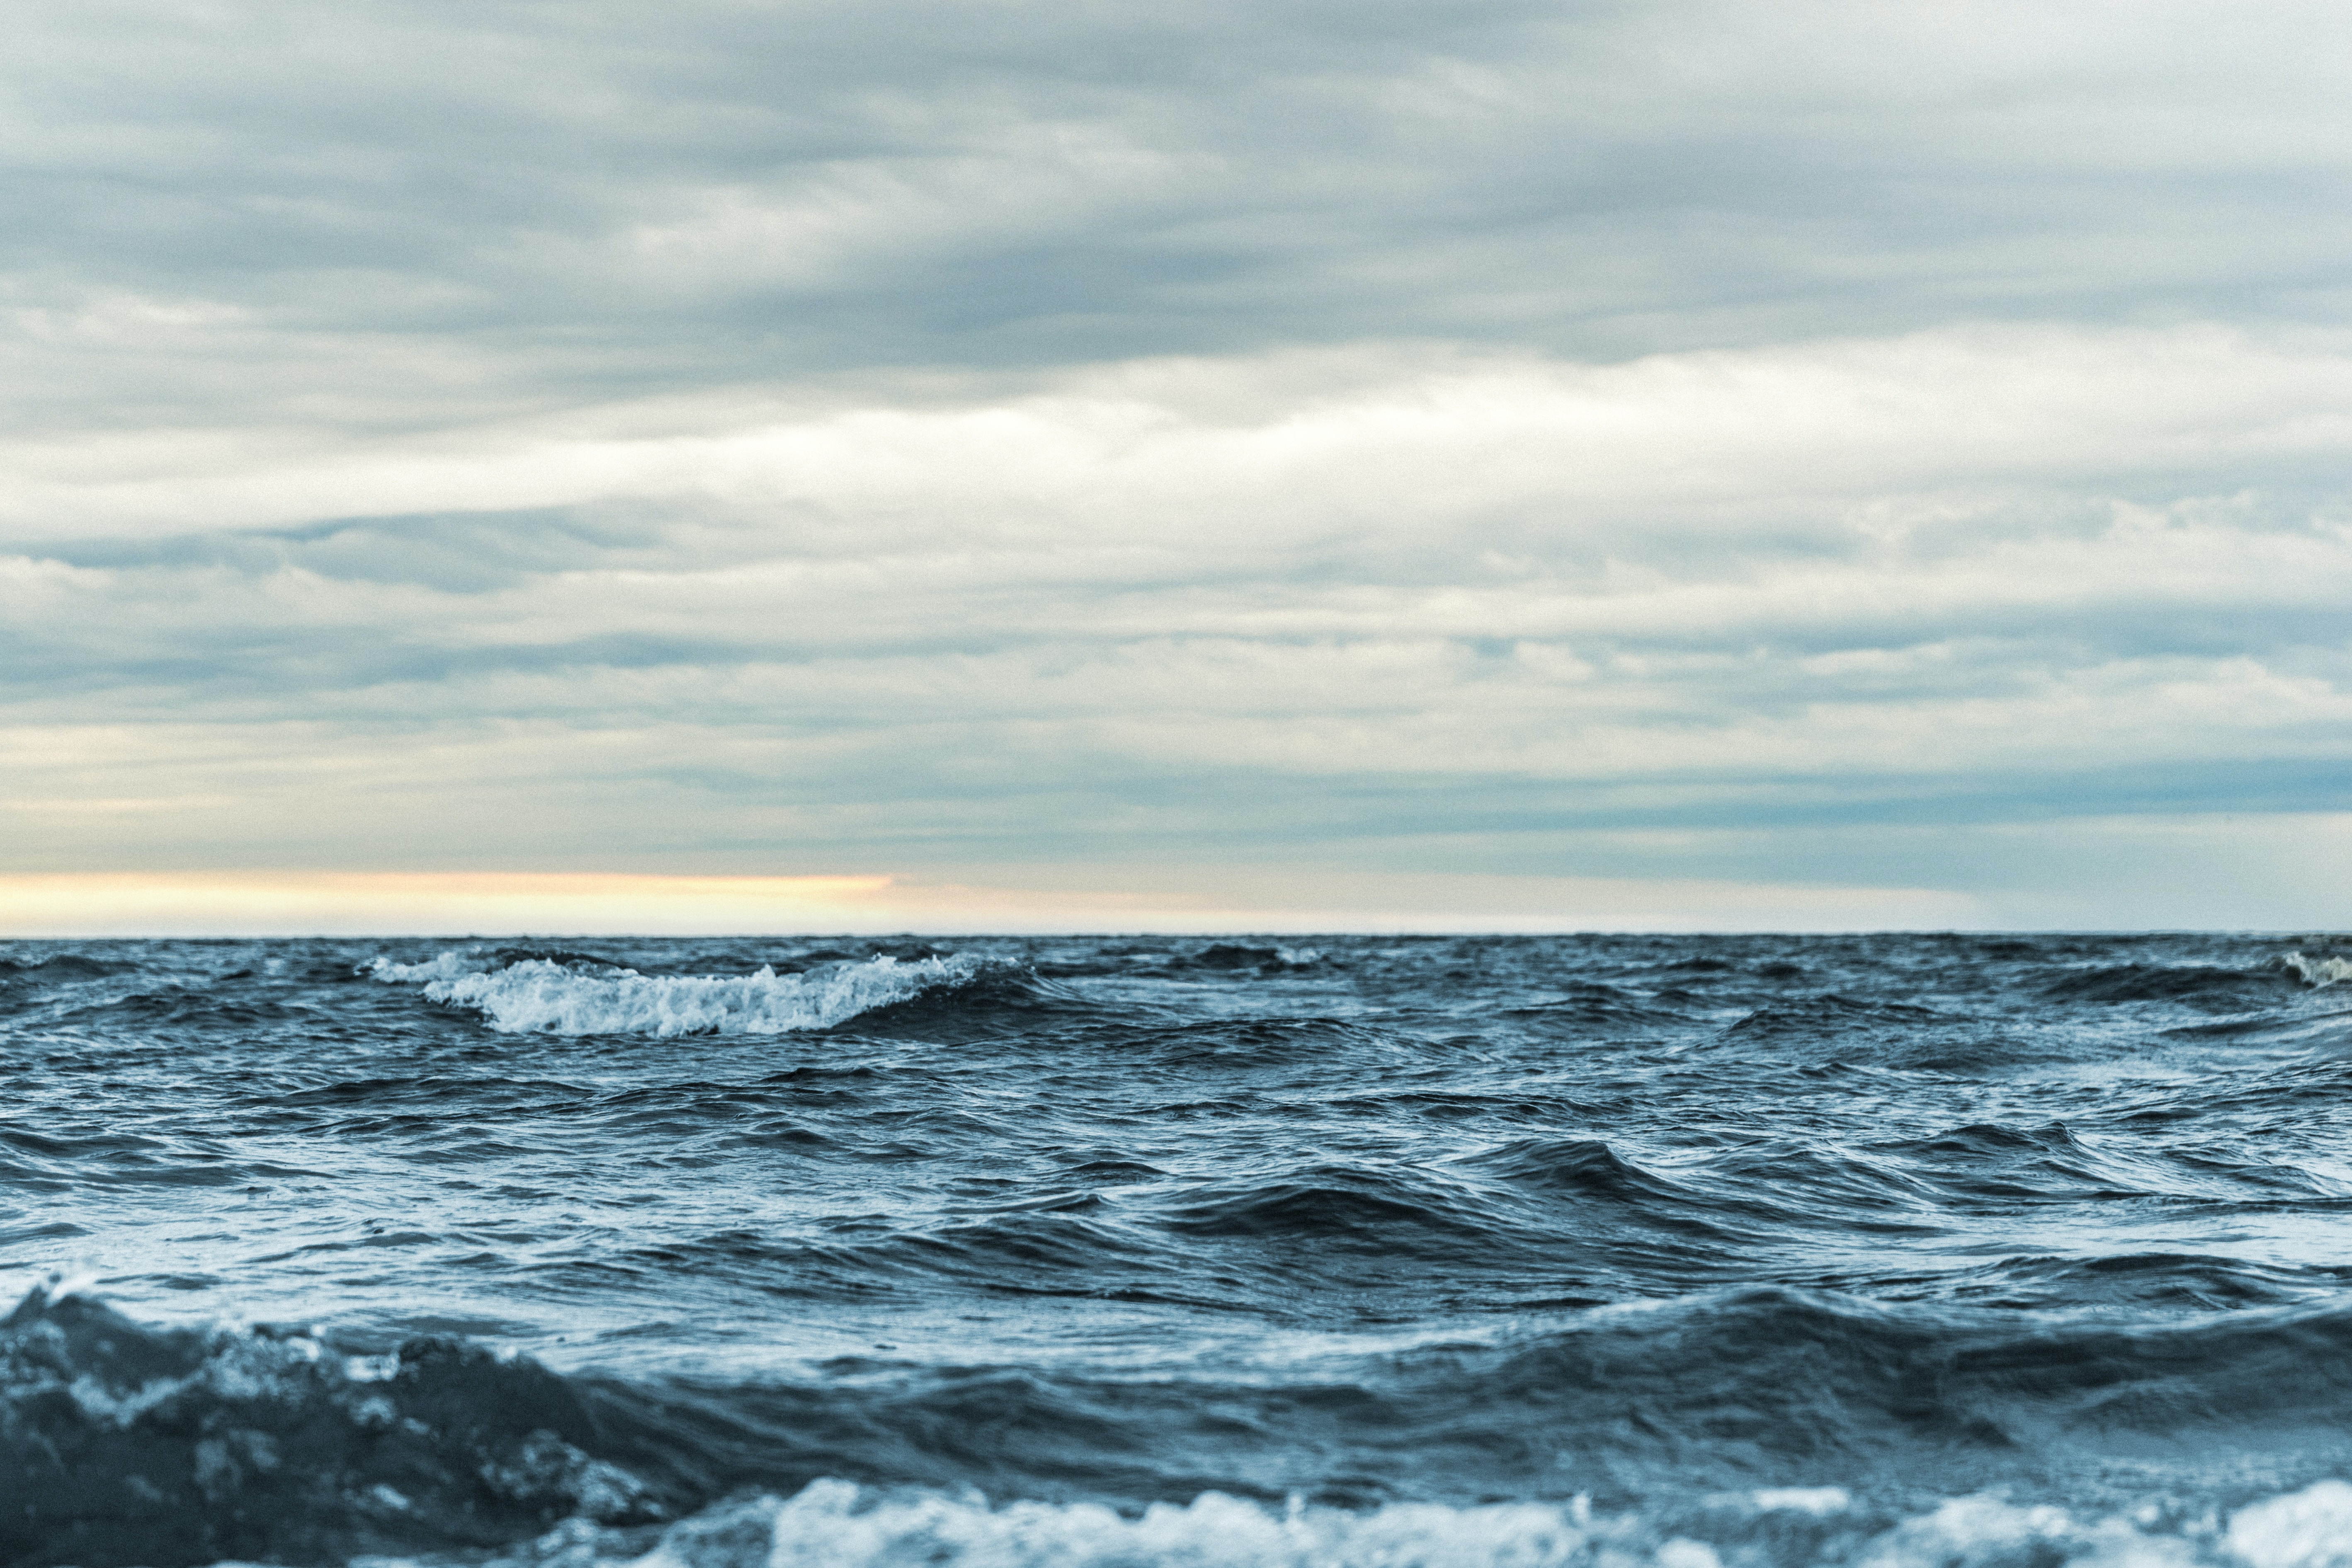 Decades of data show warming and acidification of Atlantic Ocean